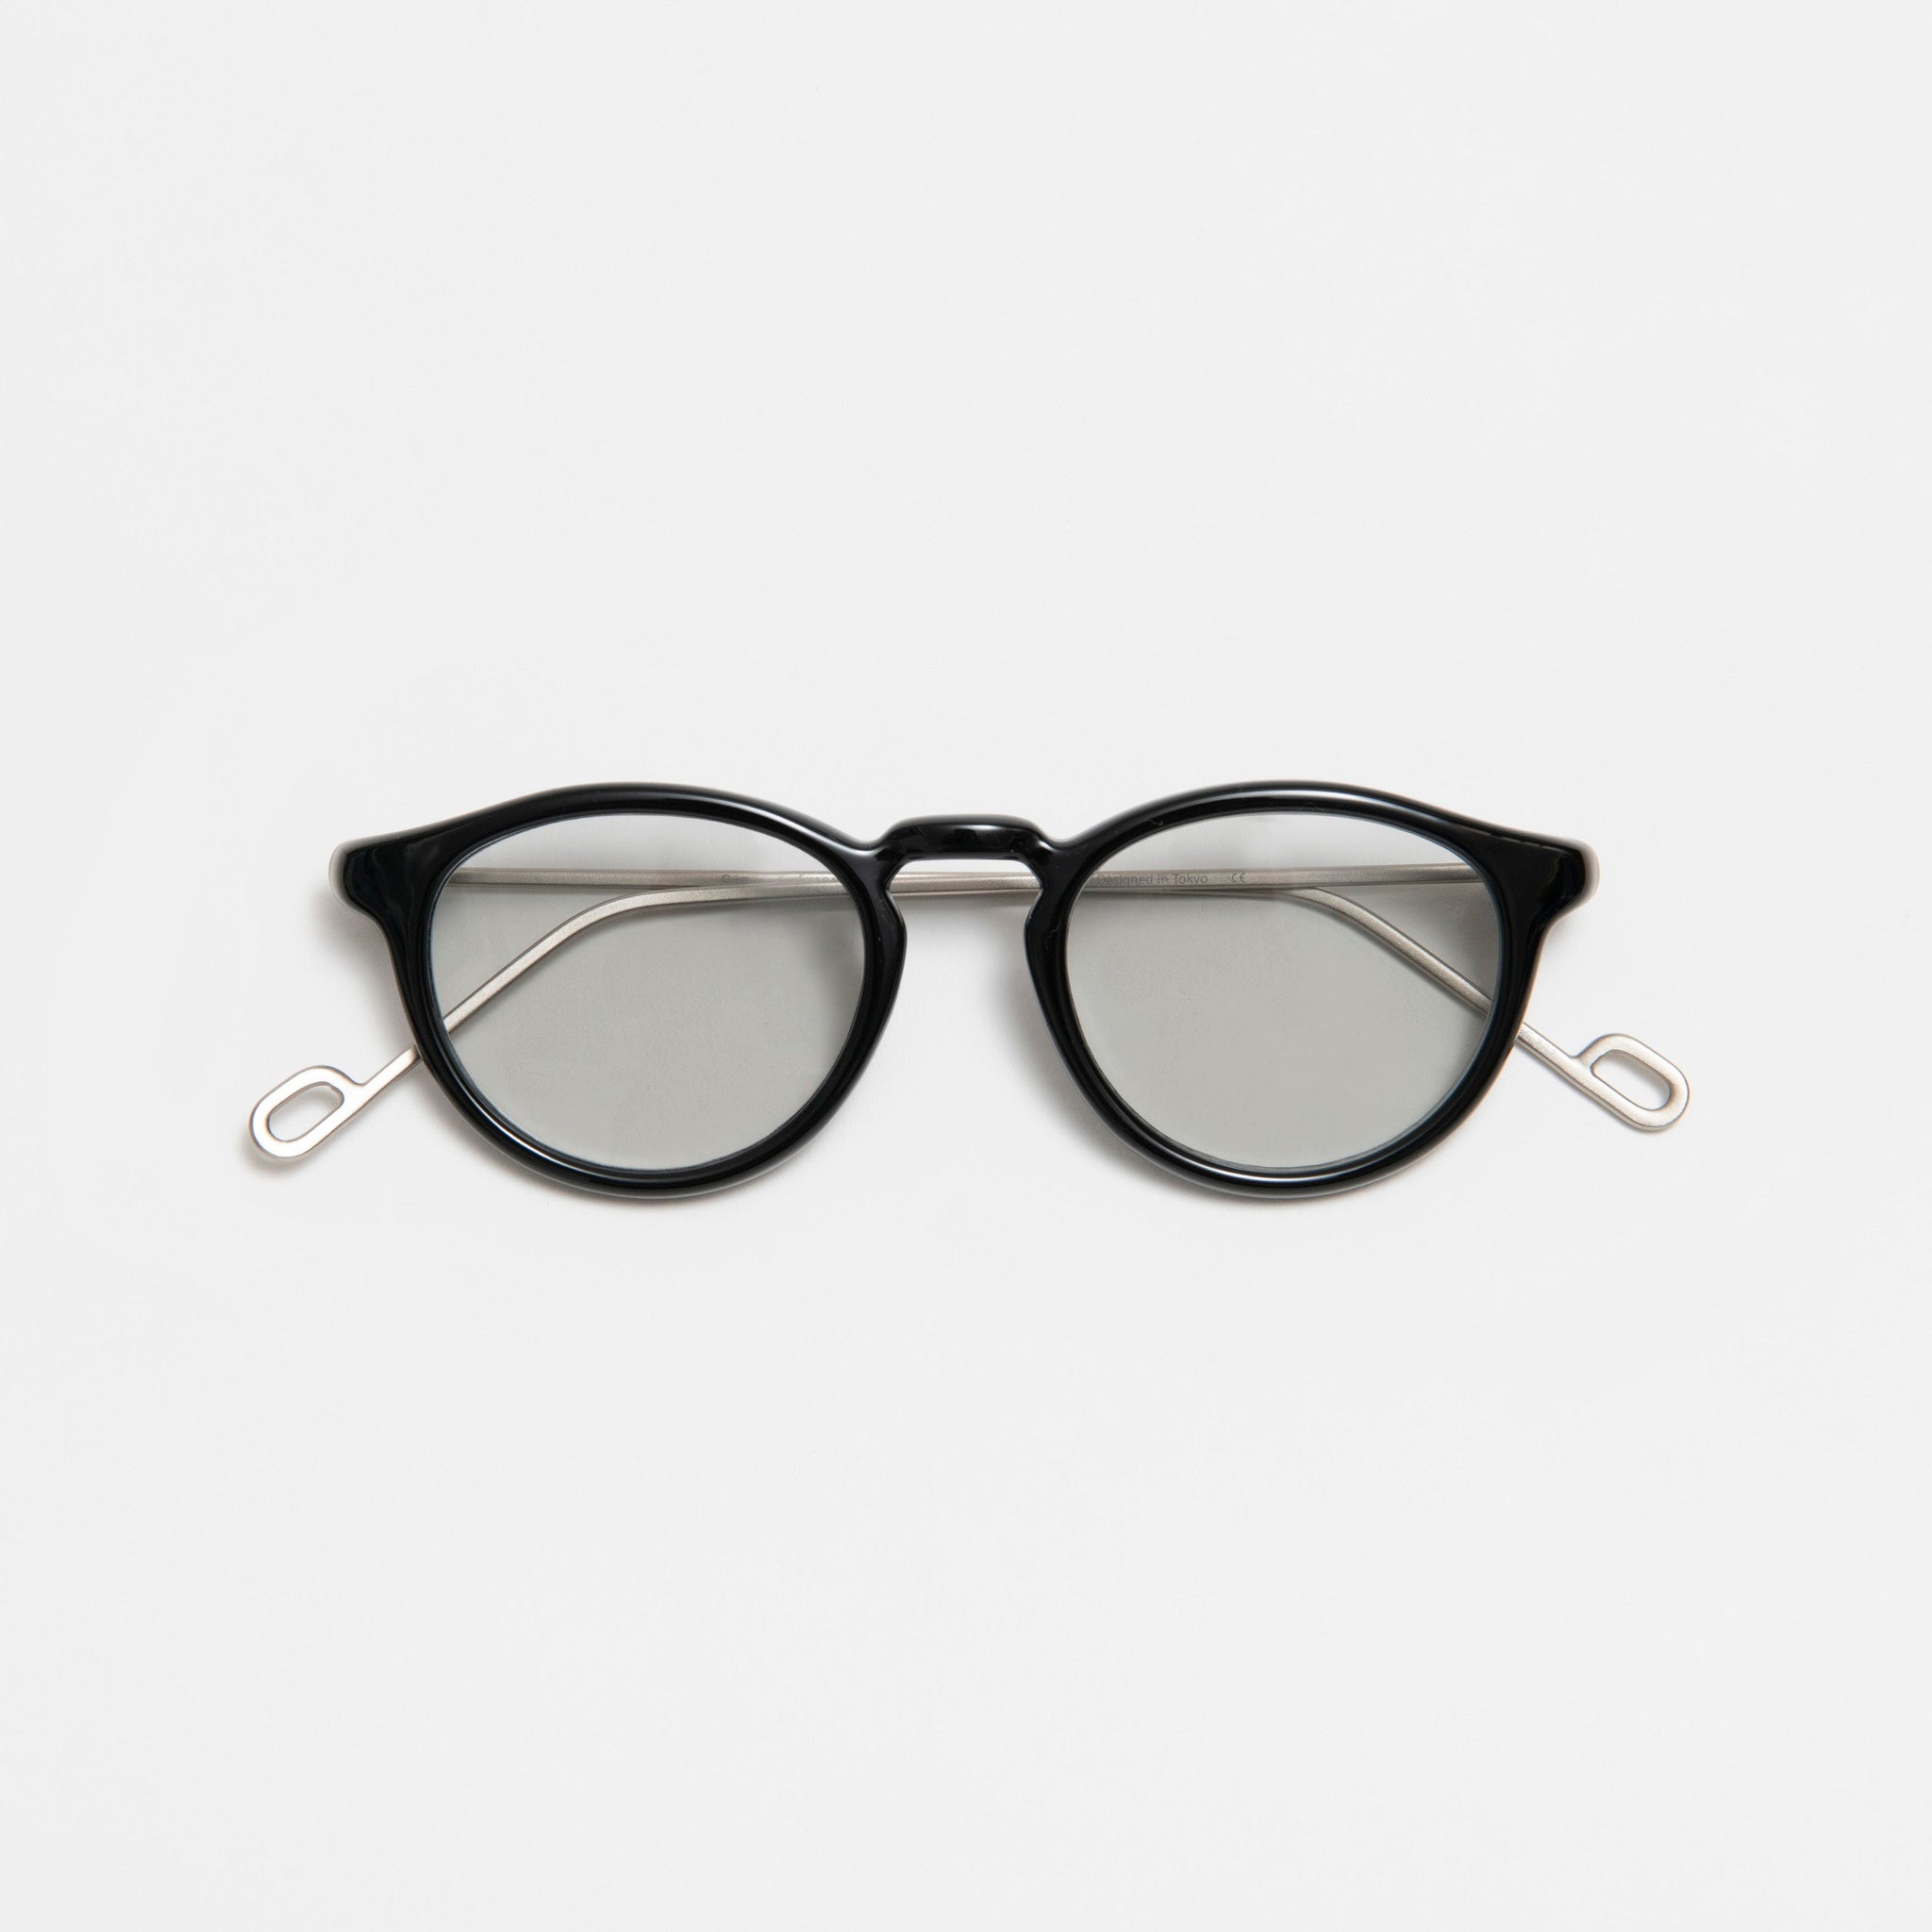 【Ciqi】EVANS サングラス Black Light Gray Lens sunglasses(エバンス ブラック ライトグレーレンズ)